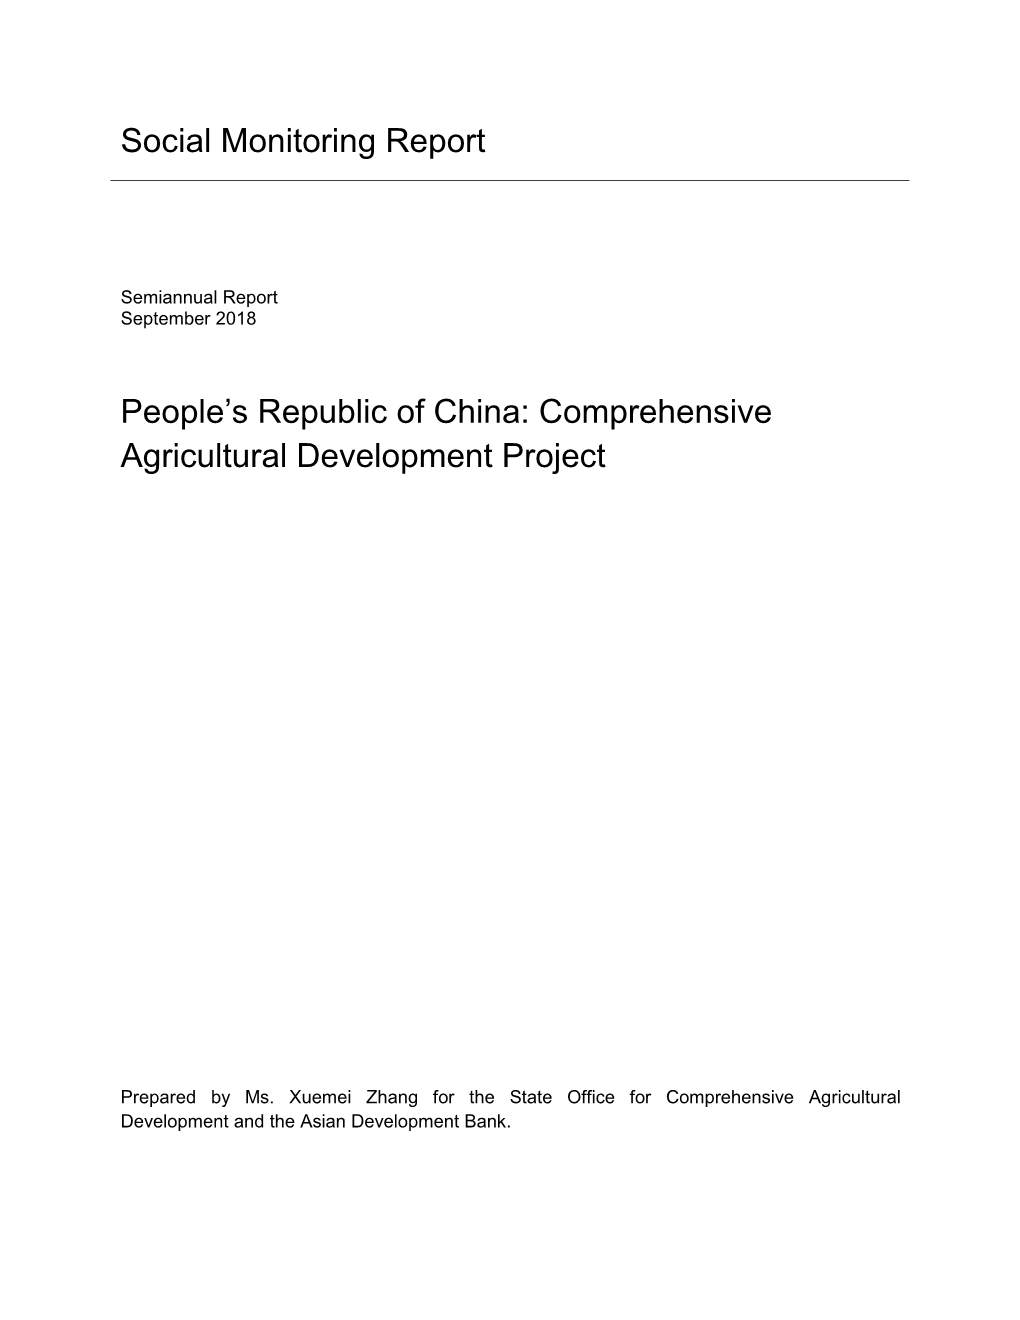 43049-013: Comprehensive Agricultural Development Project